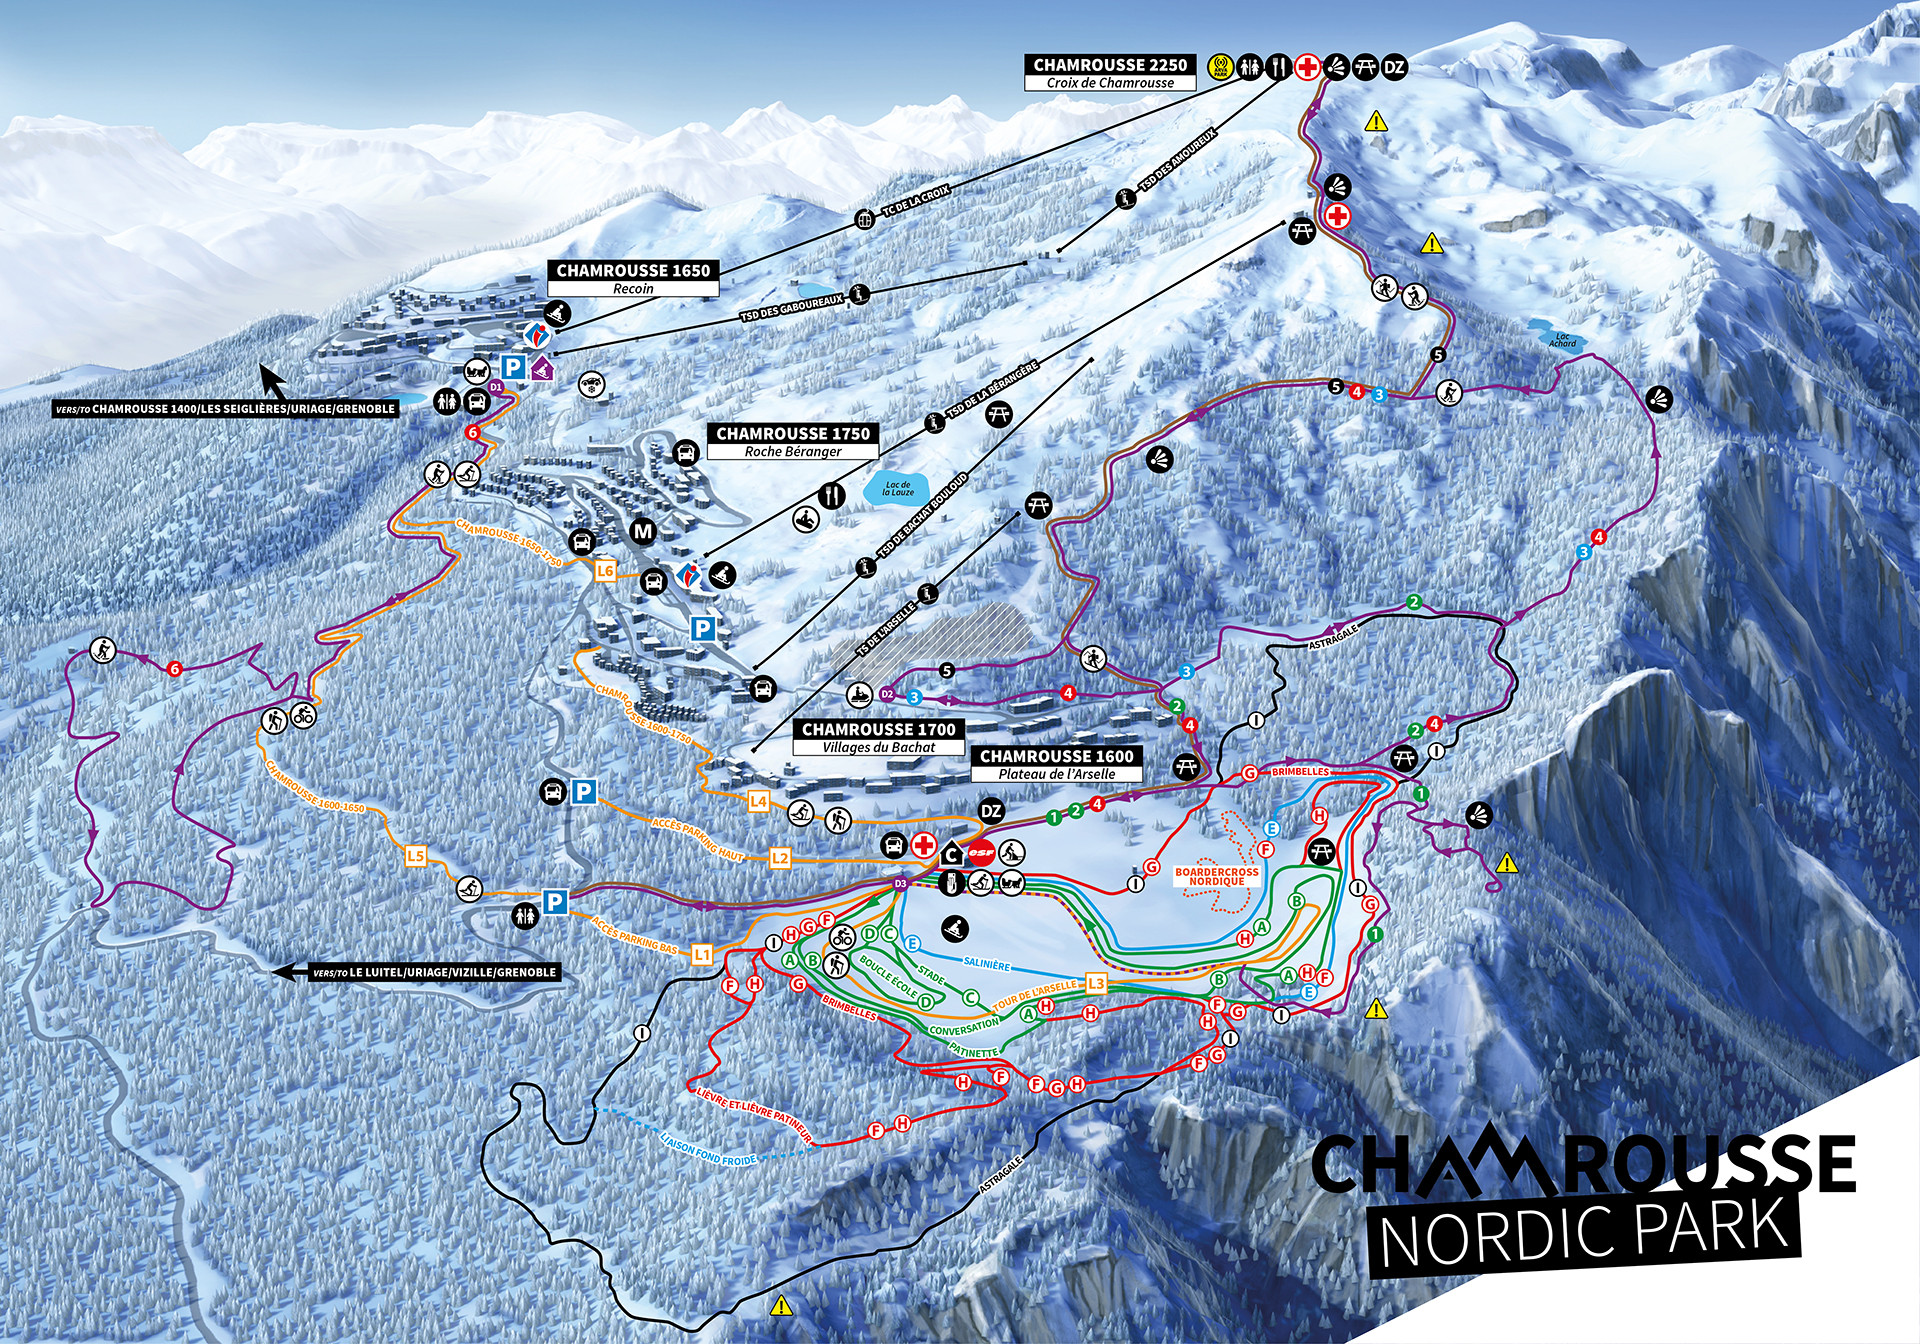 Chamrousse plan pistes domaine nordique ski fond hiver 2023 station ski montagne grenoble isère alpes france